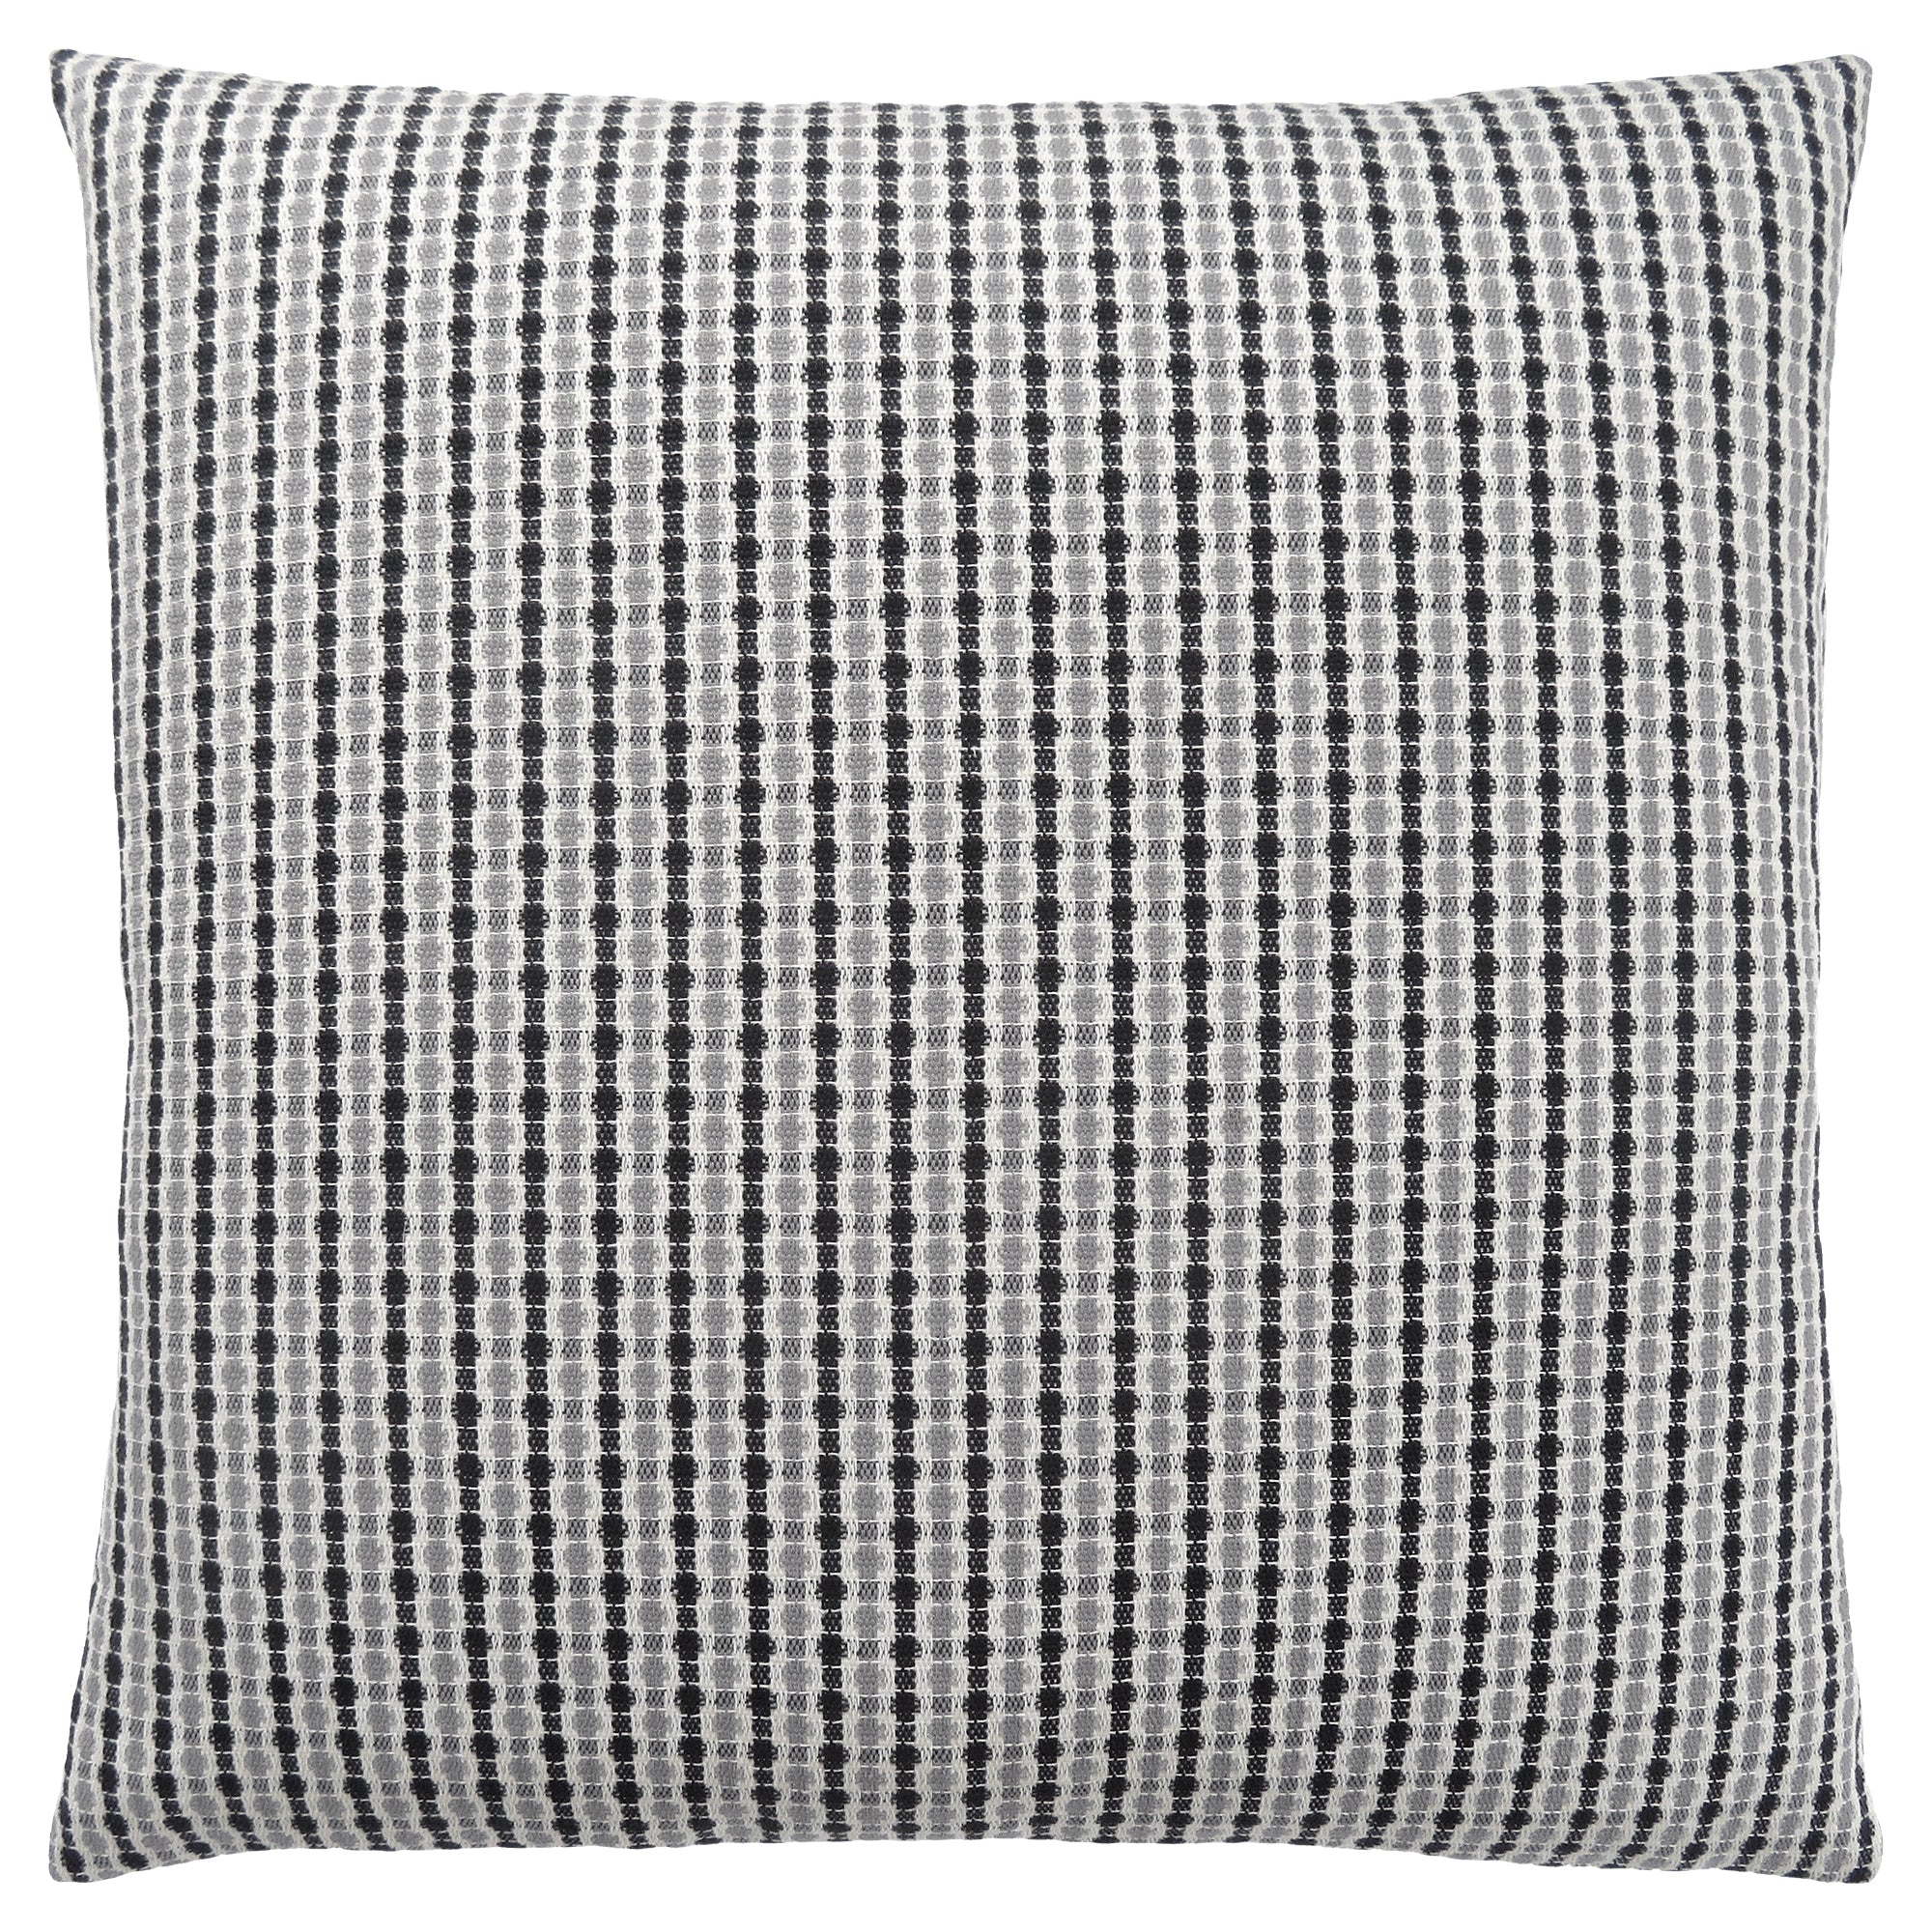 Pillow - 18X 18 / Light Grey / Black Abstract Dot / 1Pc